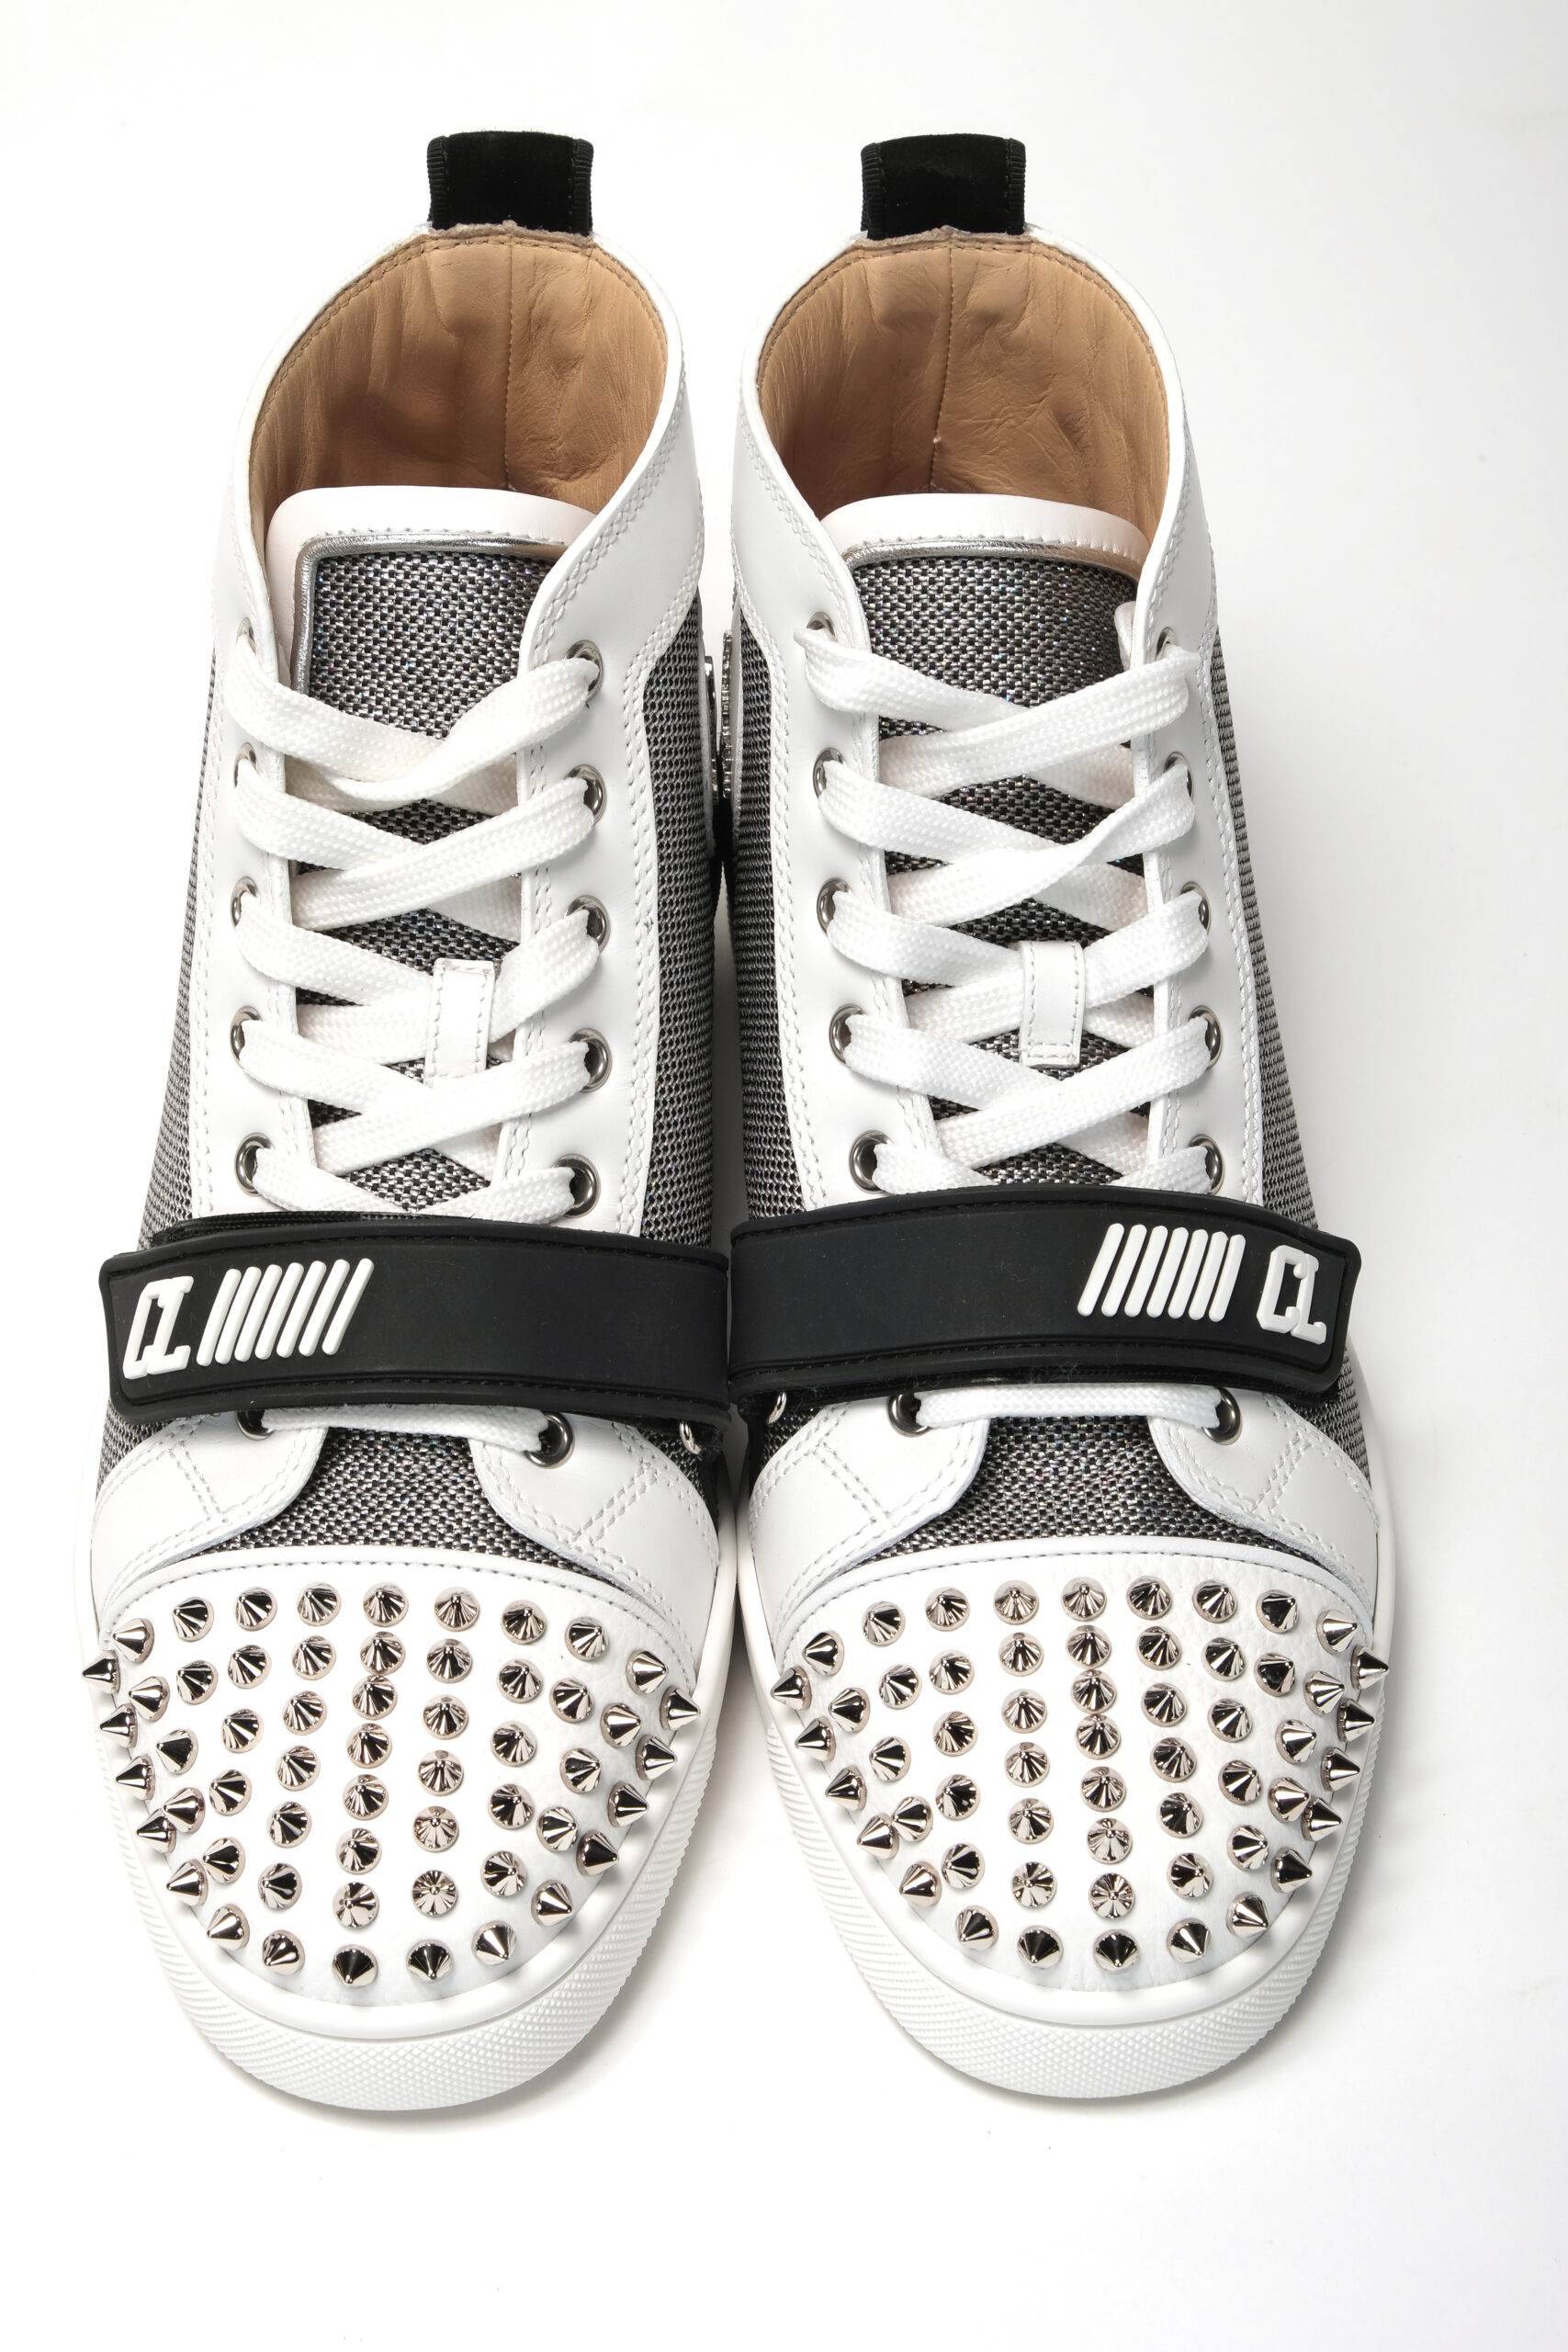 Christian Louboutin Women's Lou Spikes Fashion Sneakers Shoes US 9.5 IT  39.5 